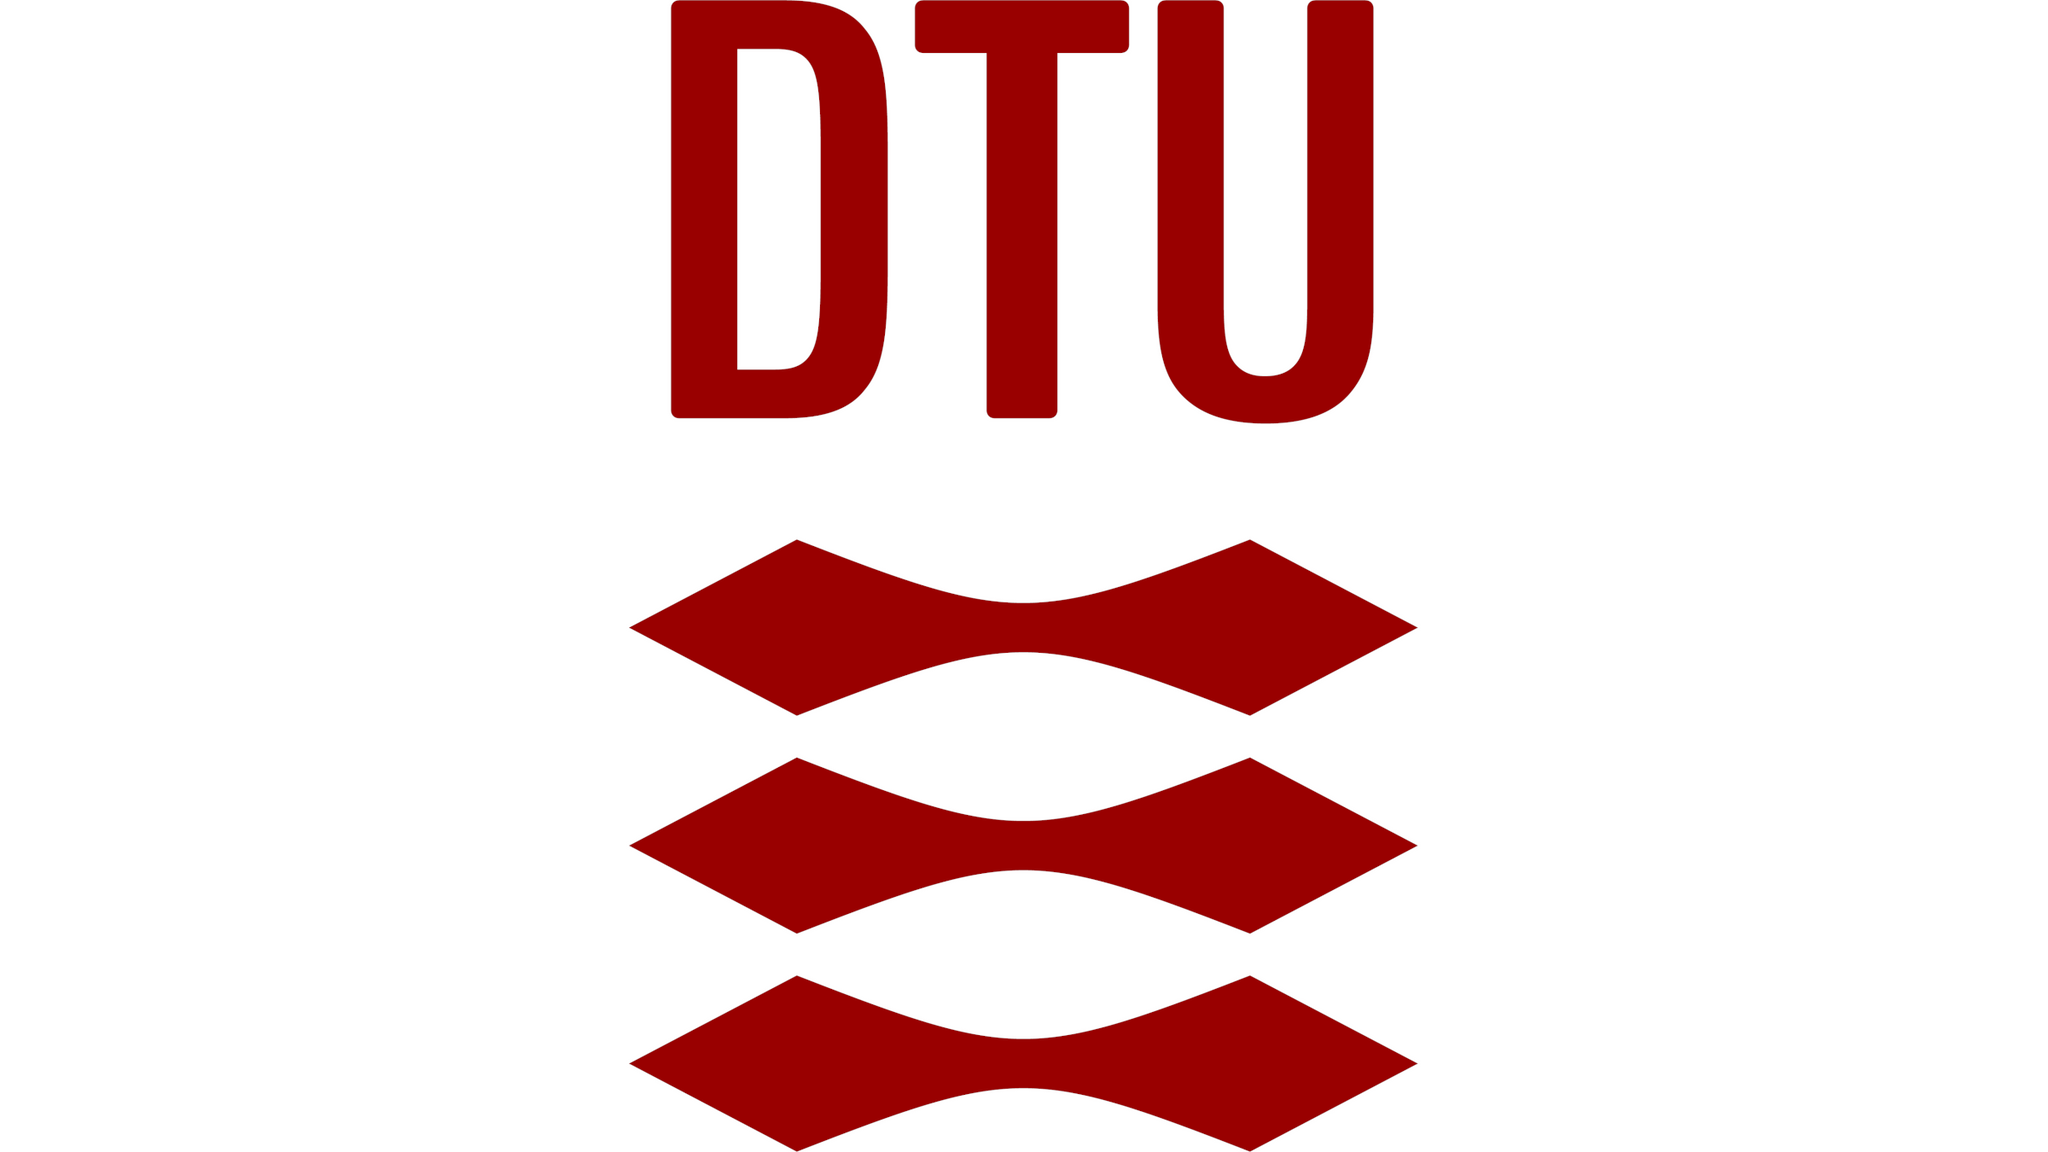 DTU (university) logo